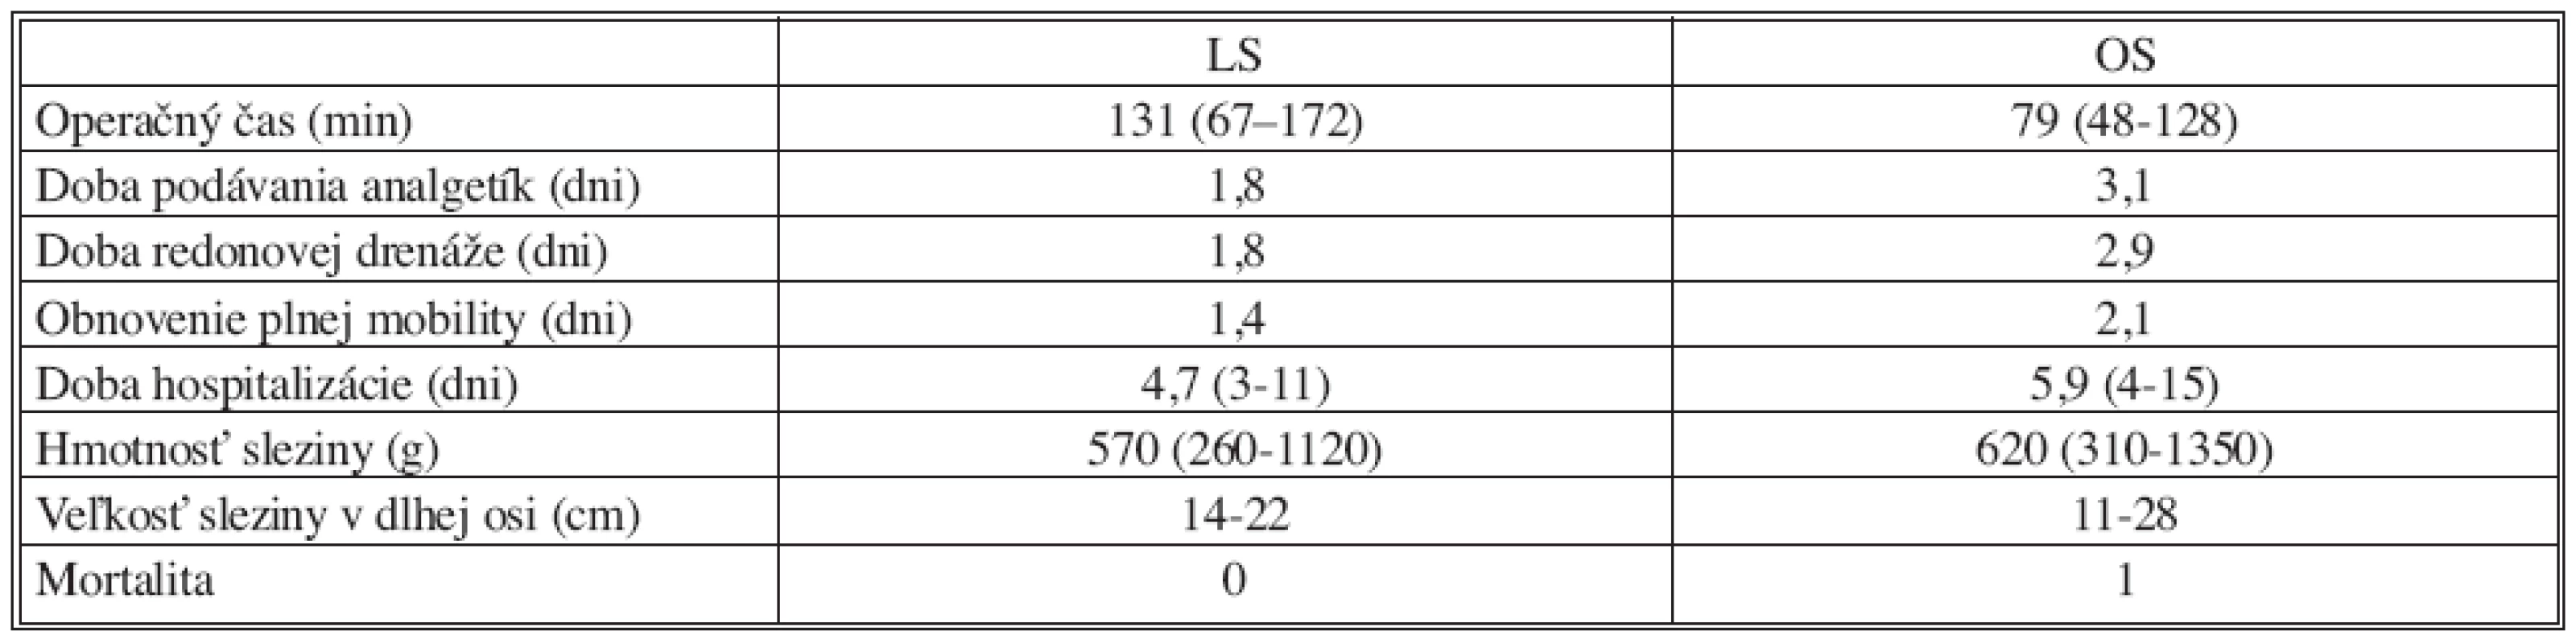 Porovnanie LS a OS
Tab. 2. Comparison between laparoscopic splenectomy versus conventional splenectomy